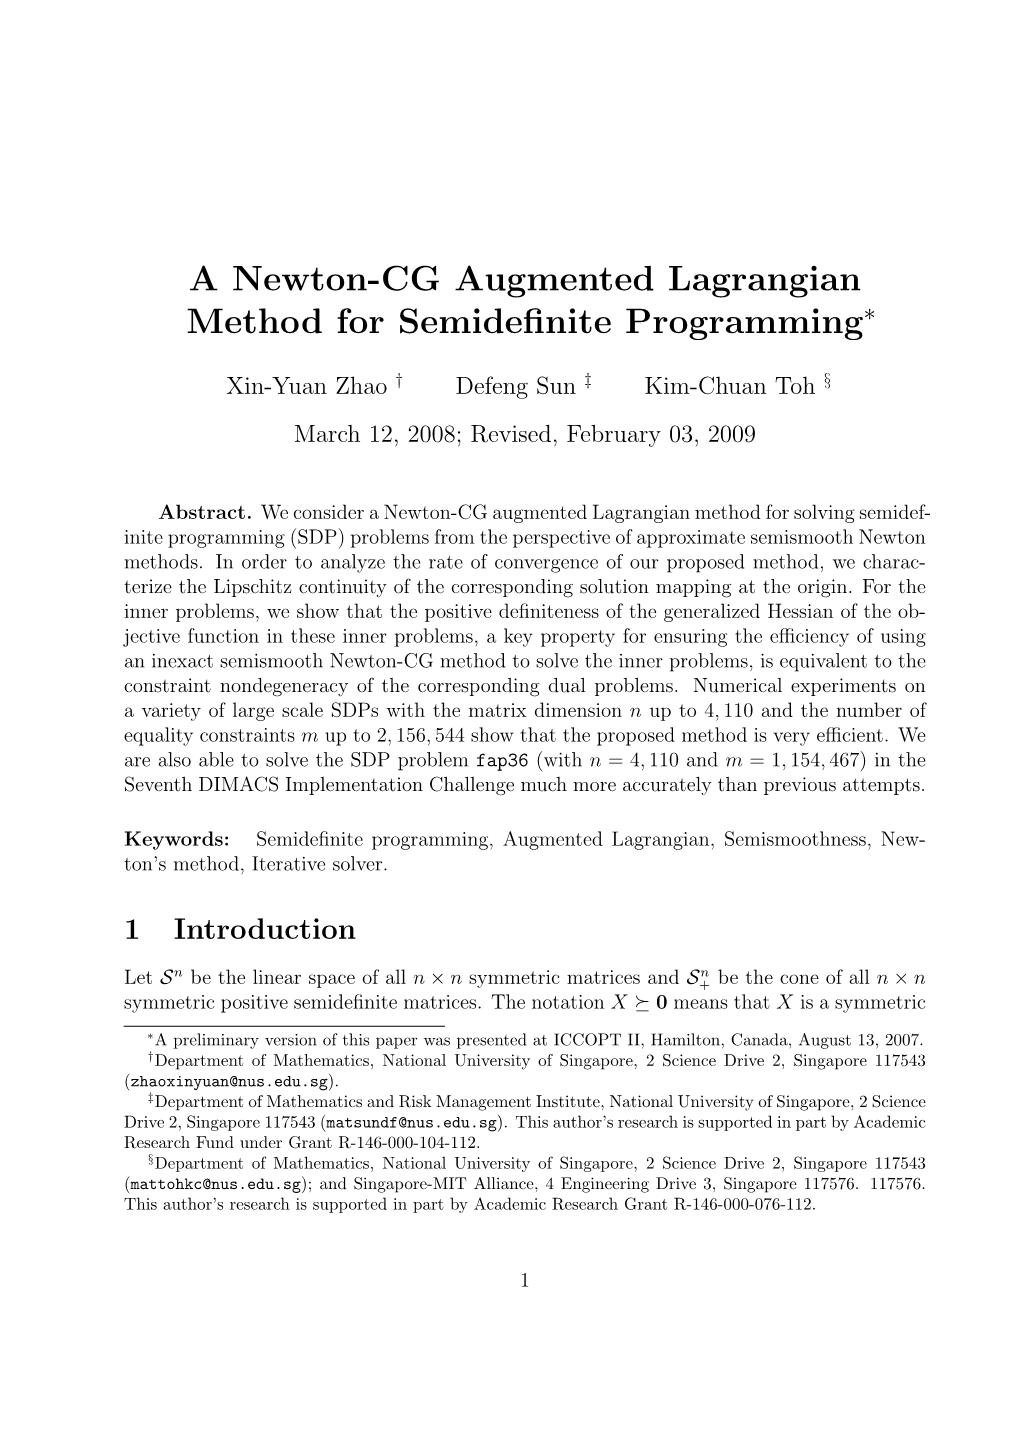 A Newton-CG Augmented Lagrangian Method for Semidefinite Programming